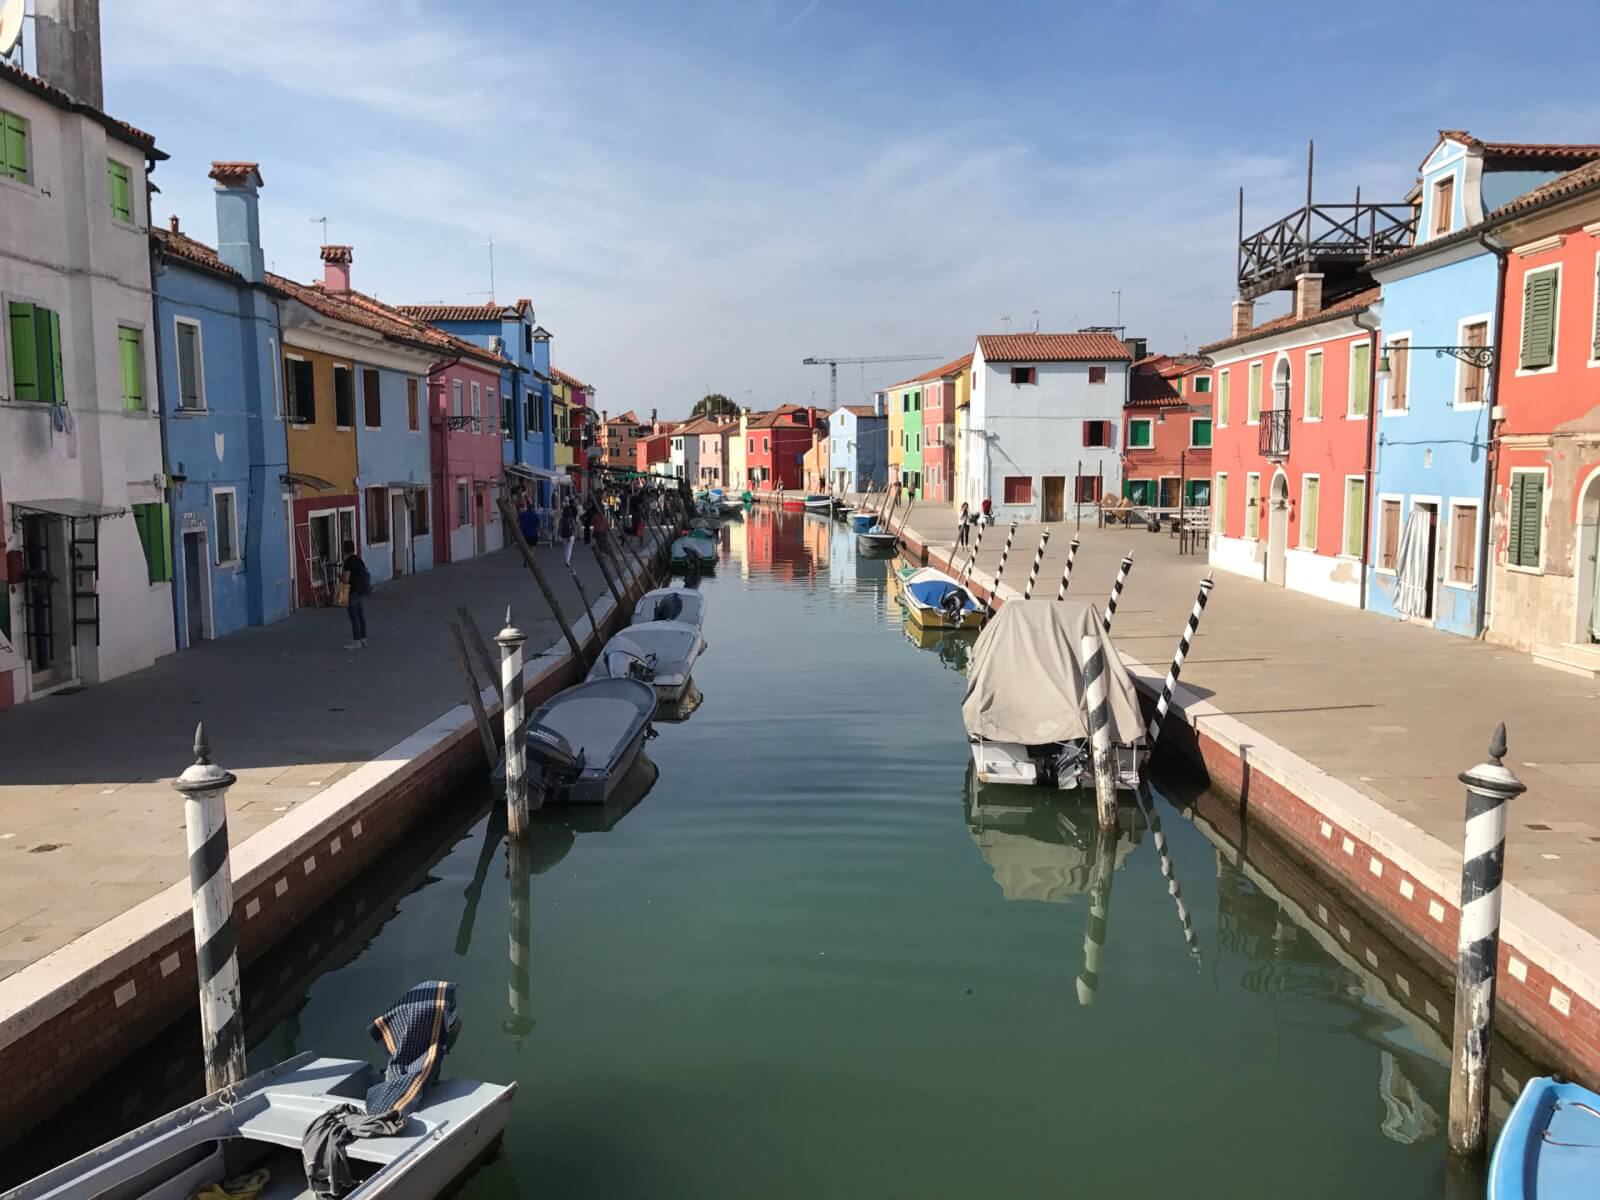 Colourful buildings in Burano, Venice